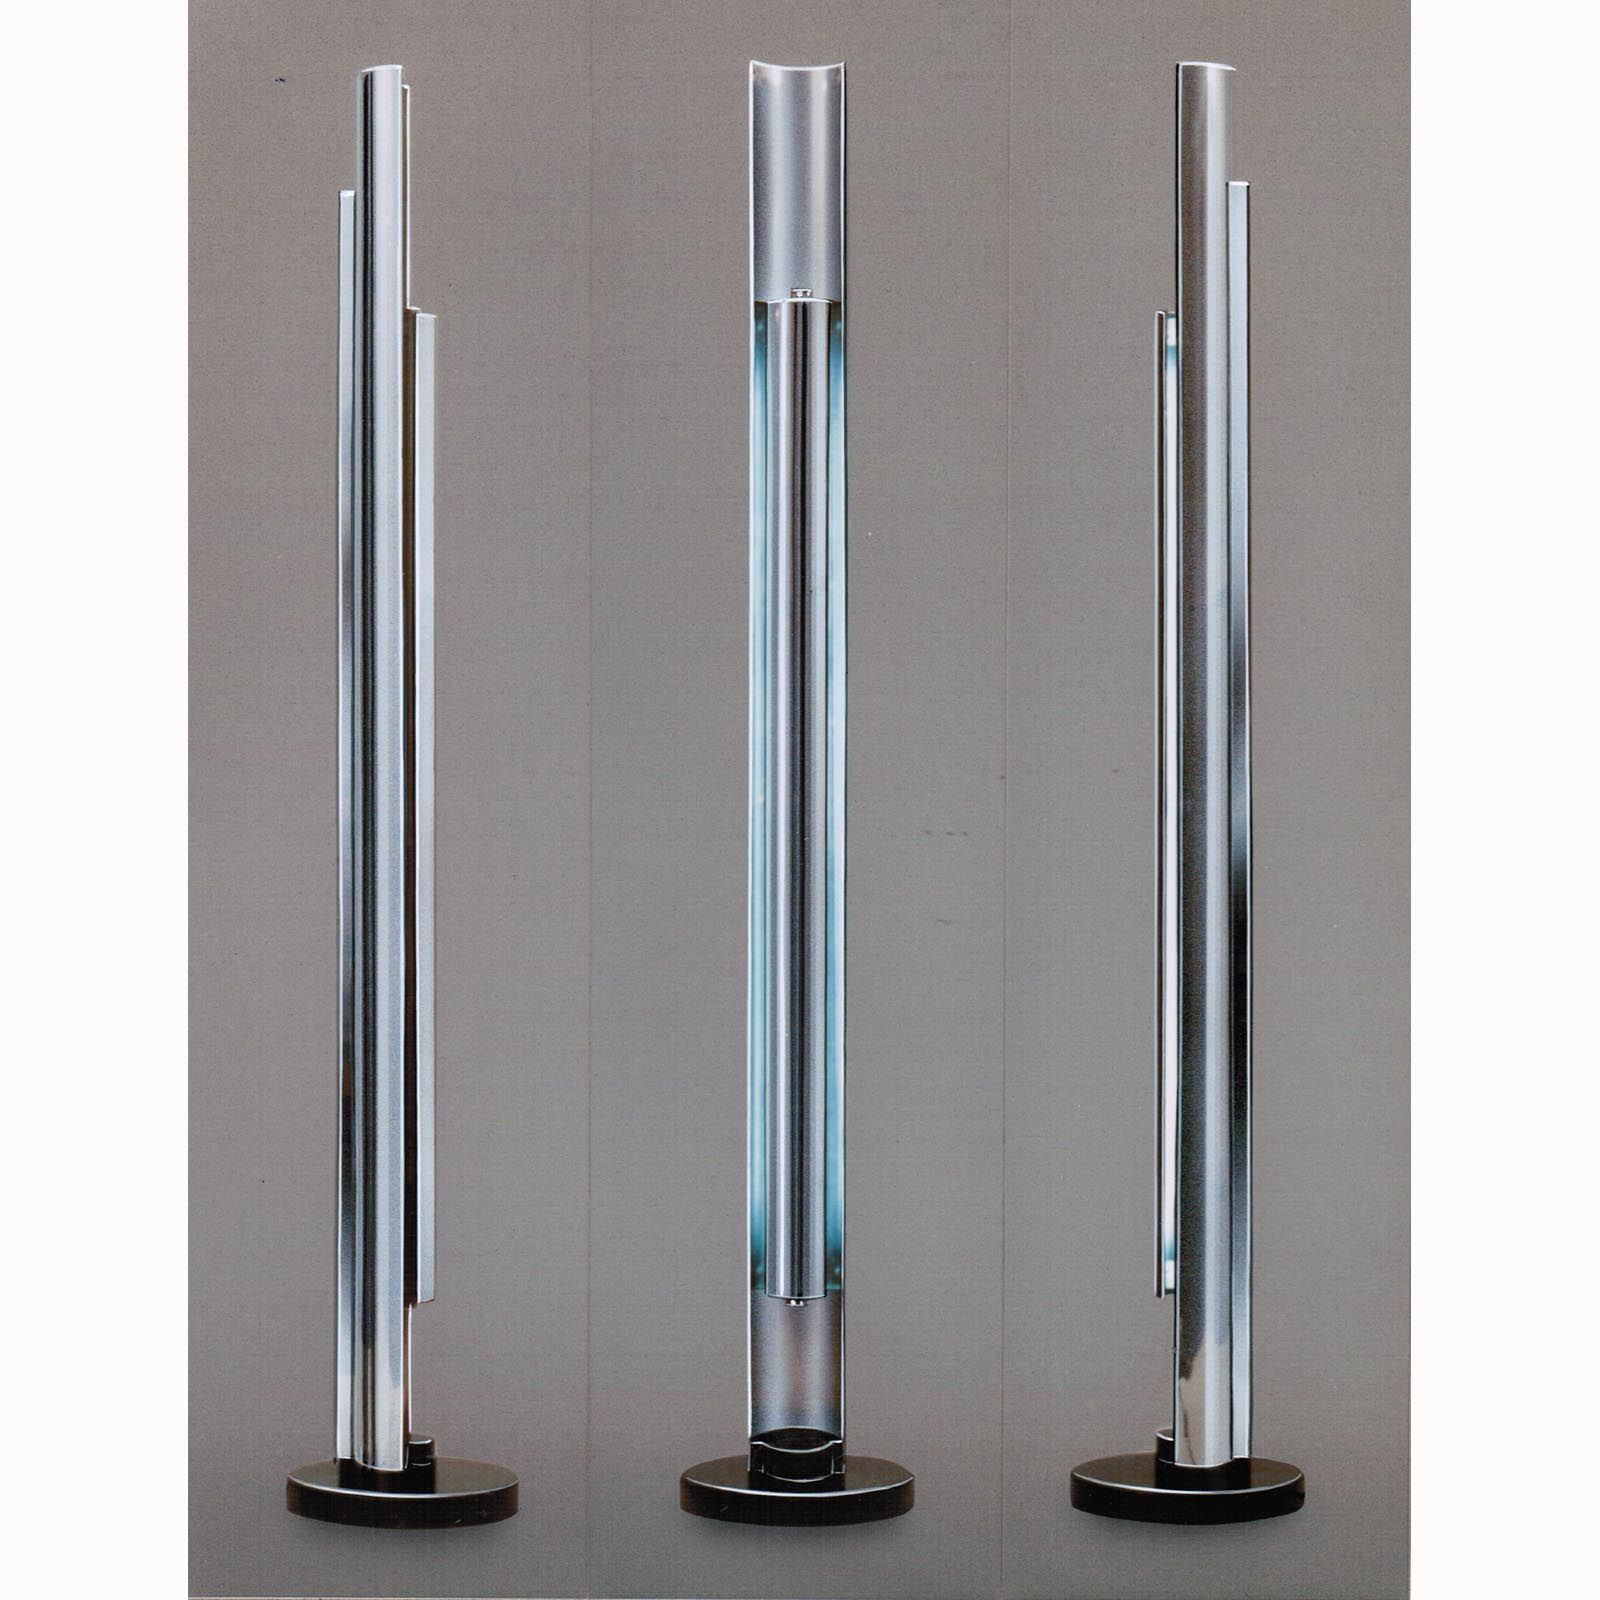 WOKA LAMPS VIENNA - OrderNr.: 1014|Manhattan - Design: Harry Glück